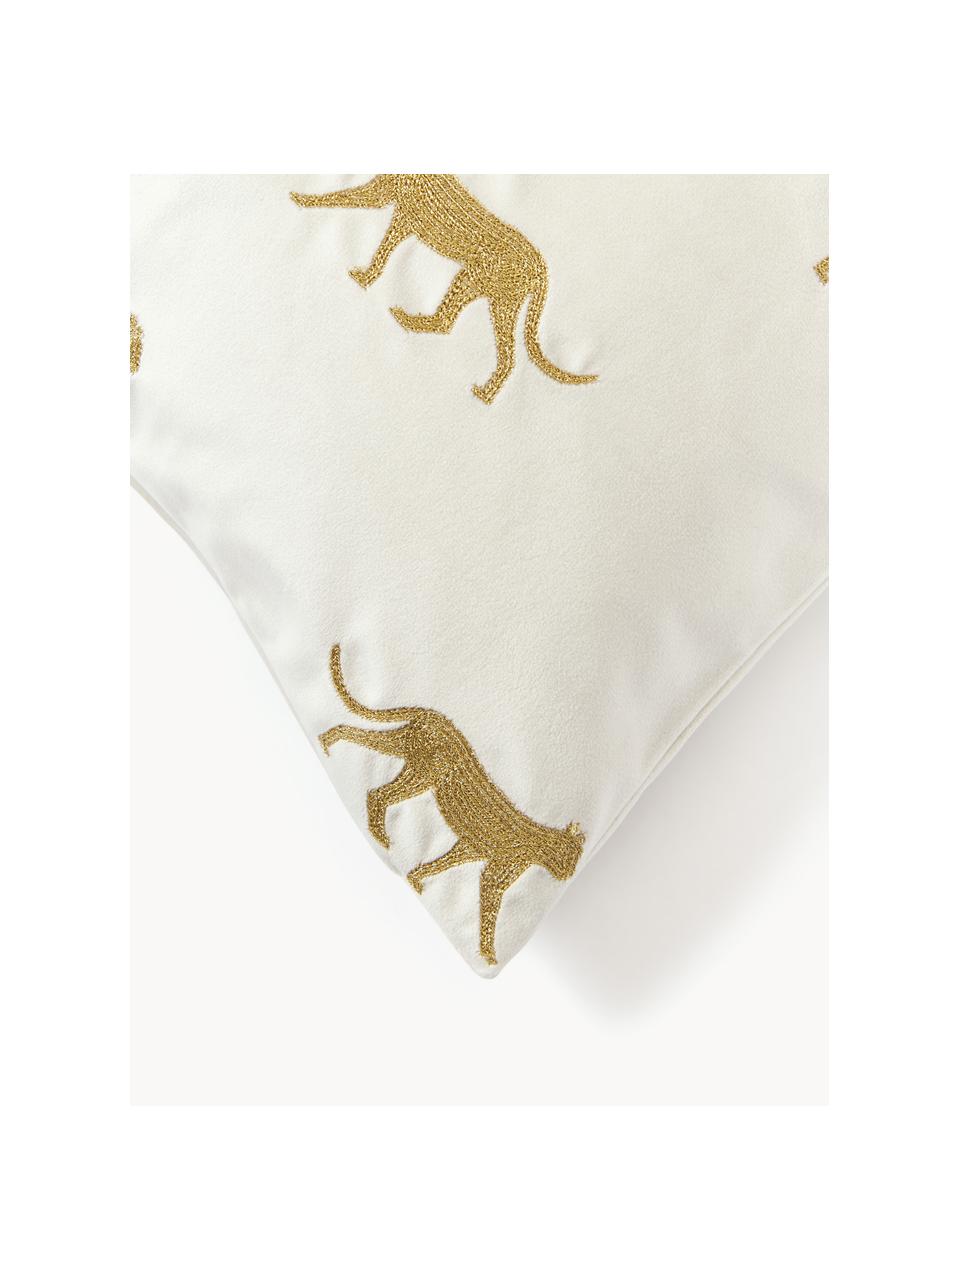 Bestickte Samt-Kissenhülle Cheetah, 100 % Polyestersamt, Off White, Goldfarben, B 45 x L 45 cm